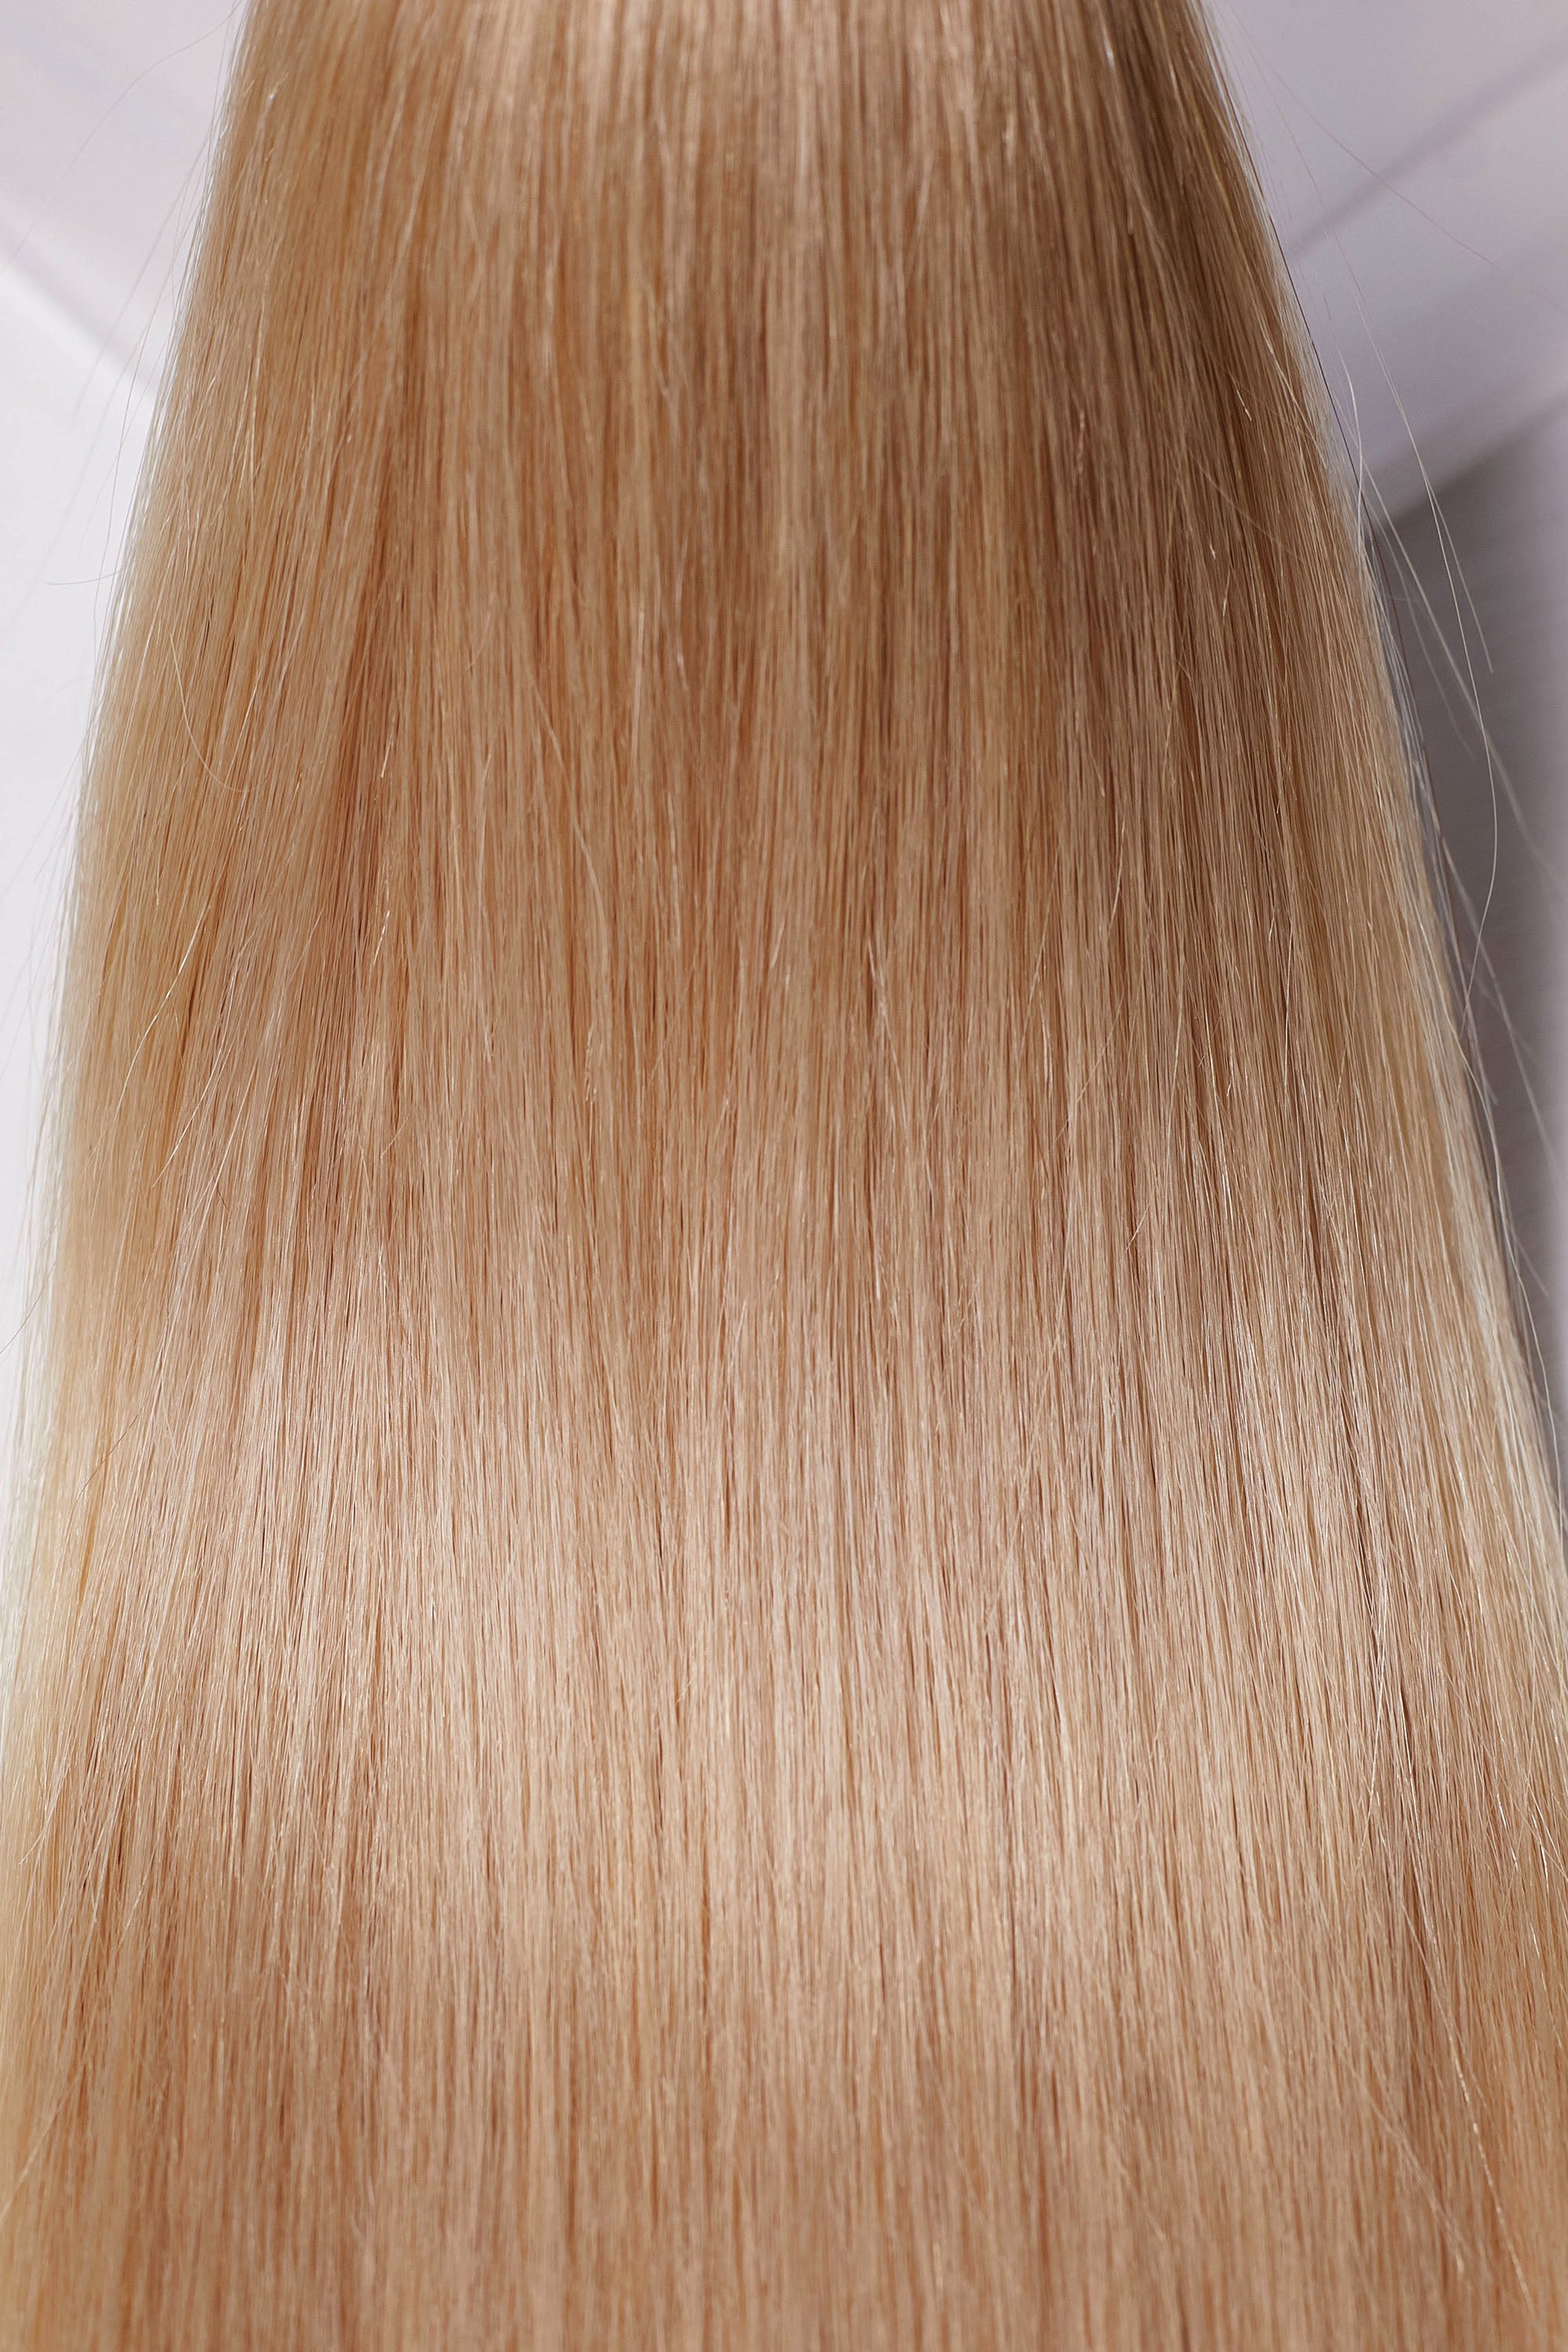 Behair professional Keratin Tip "Premium" 28" (70cm) Natural Straight Light Gold Sand #16 - 25g (Micro - 0.5g each pcs) hair extensions